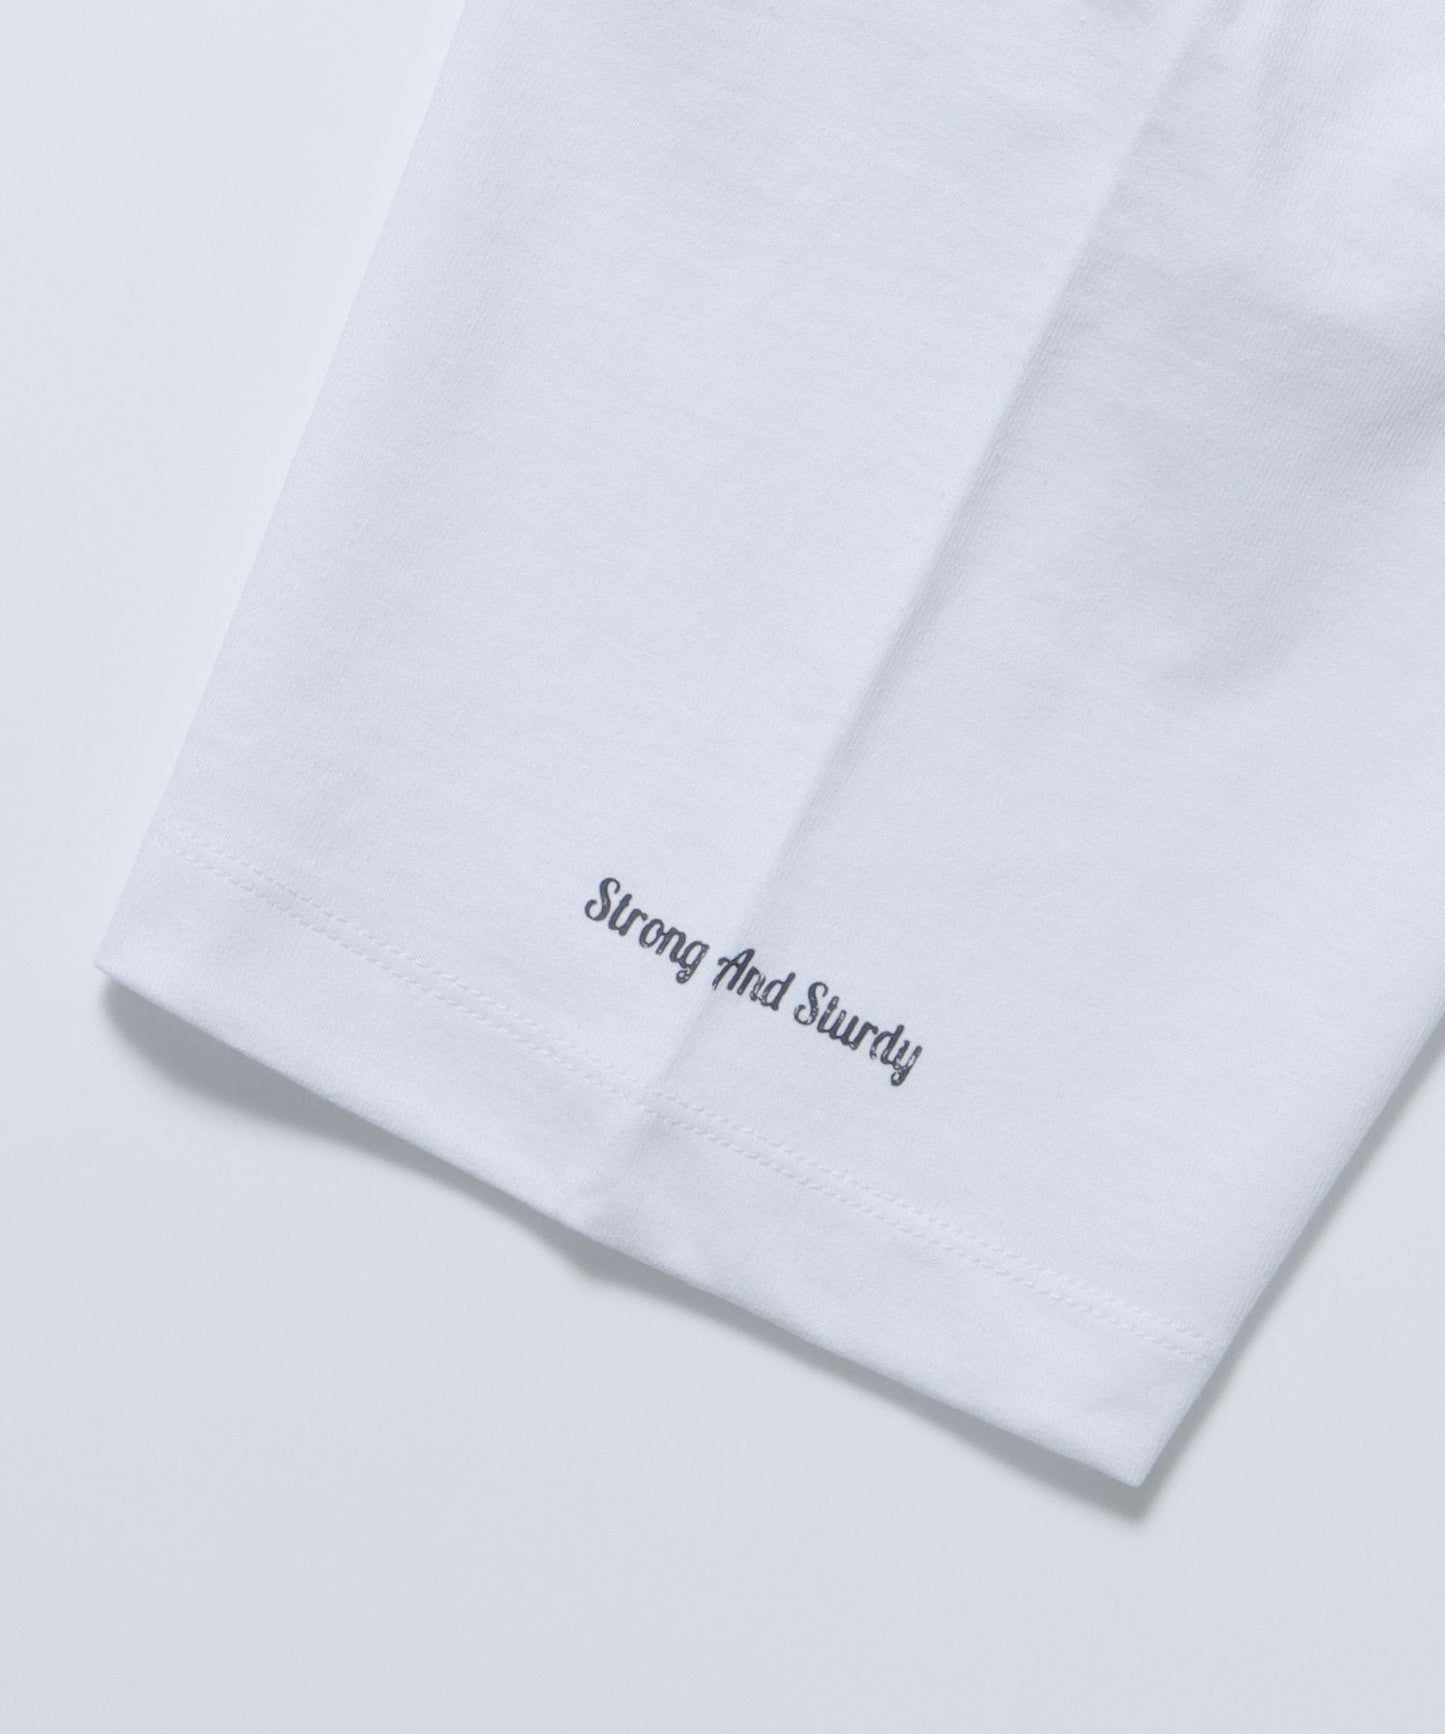 CLASSIC LOGO TEE / 半袖Tシャツ ロゴ刺繍 クルーネック オーバーサイズ ブランドロゴ フロント ルード ホワイト